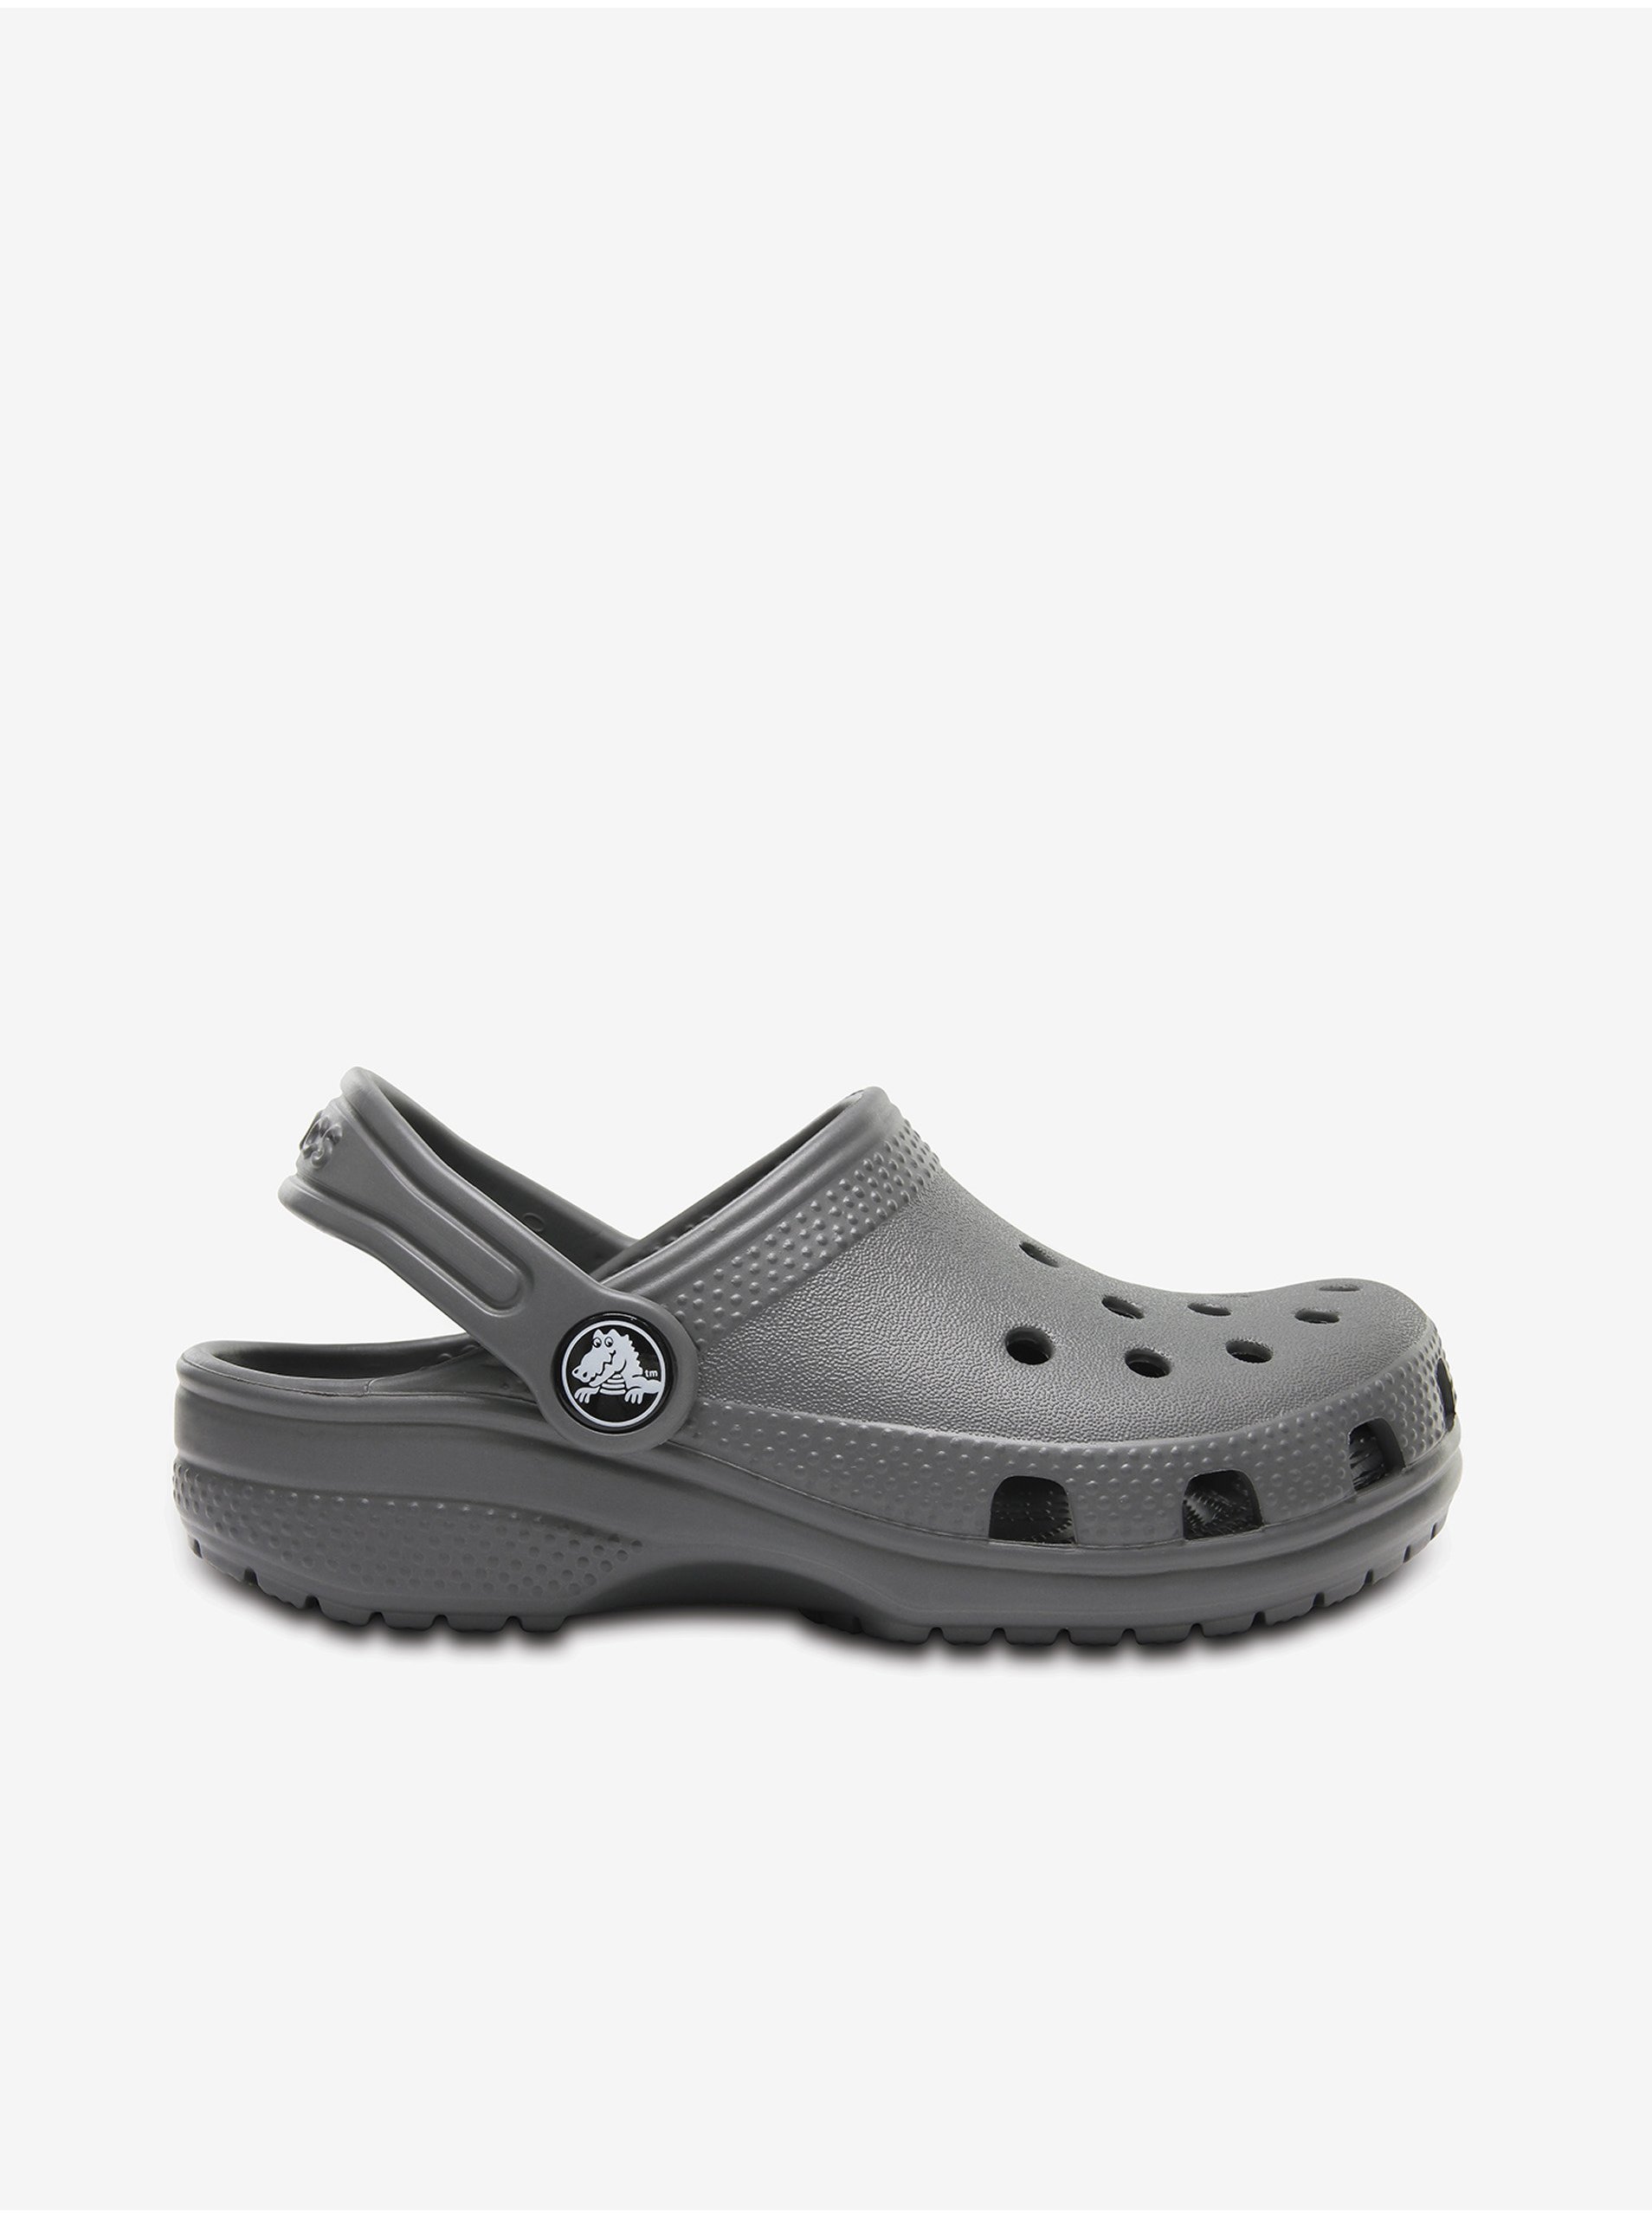 Gray children's slippers Crocs - Boys